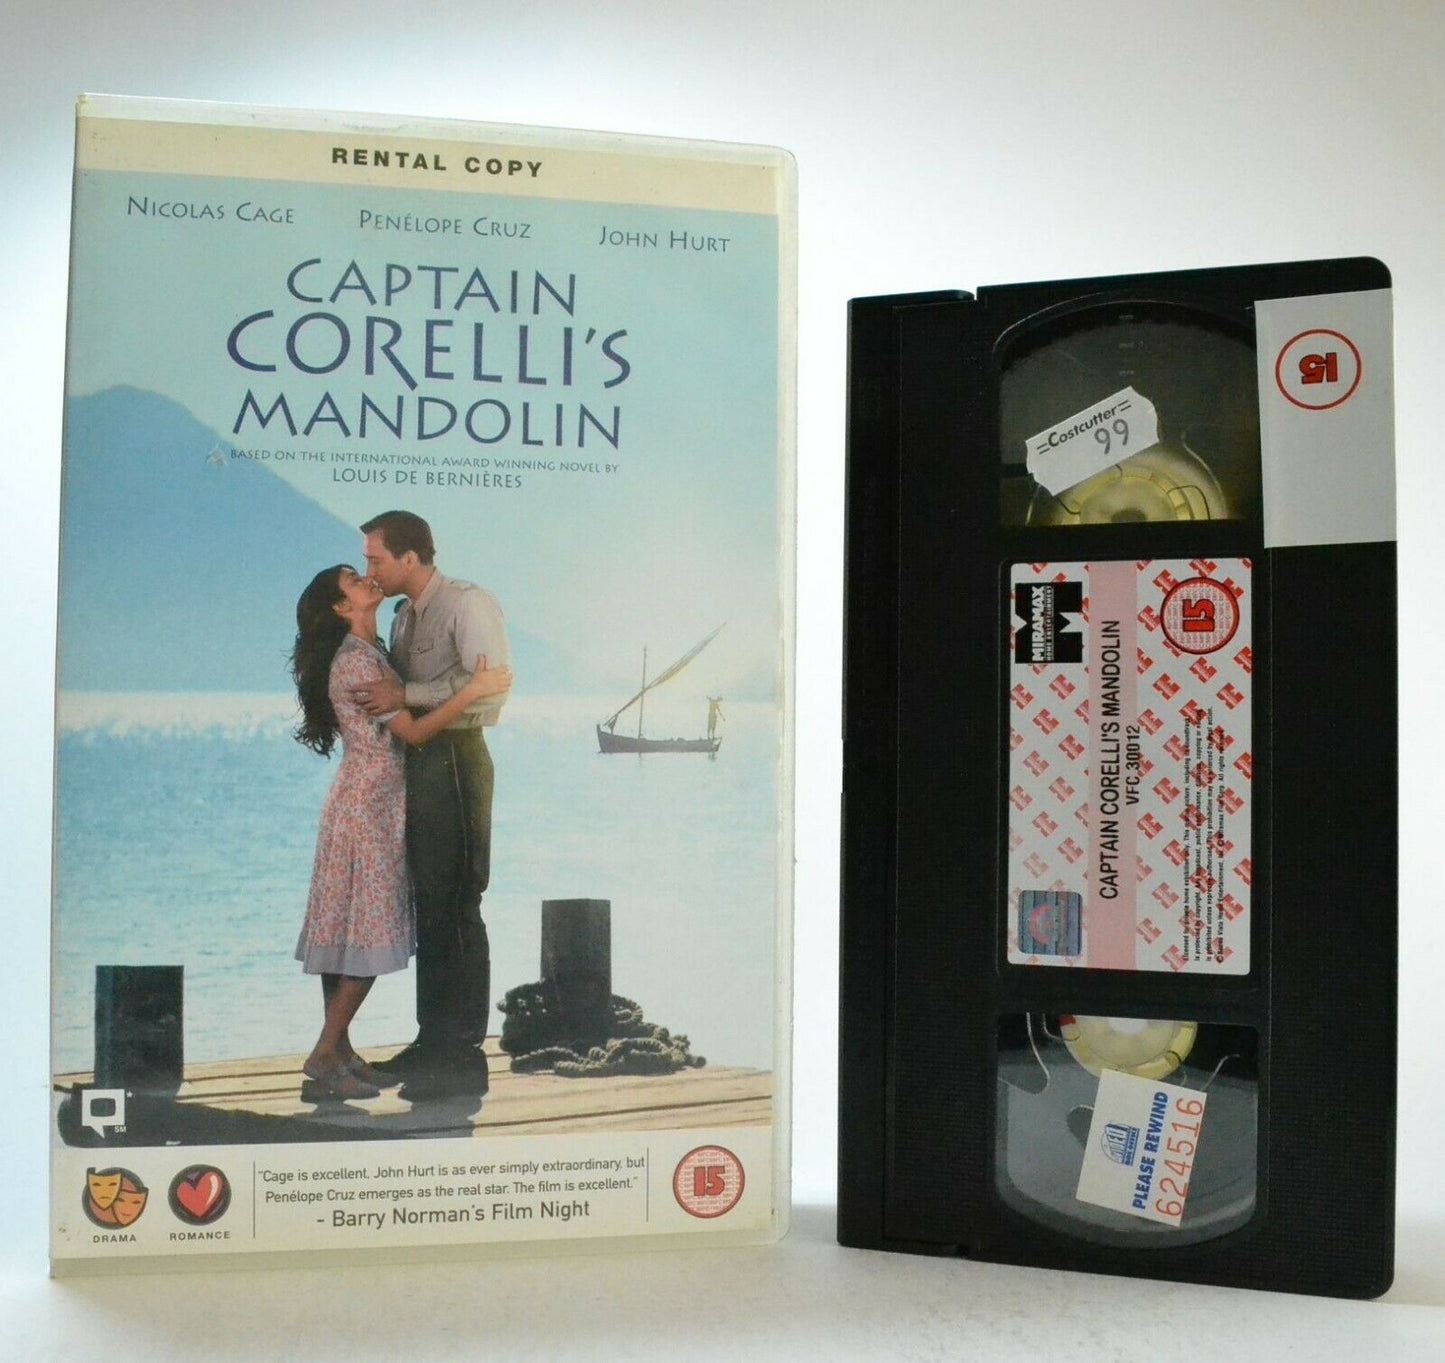 Captain Corelli's Mandolin: Romance/Drama - Large Box - N.Cage/P.Cruz - Pal VHS-